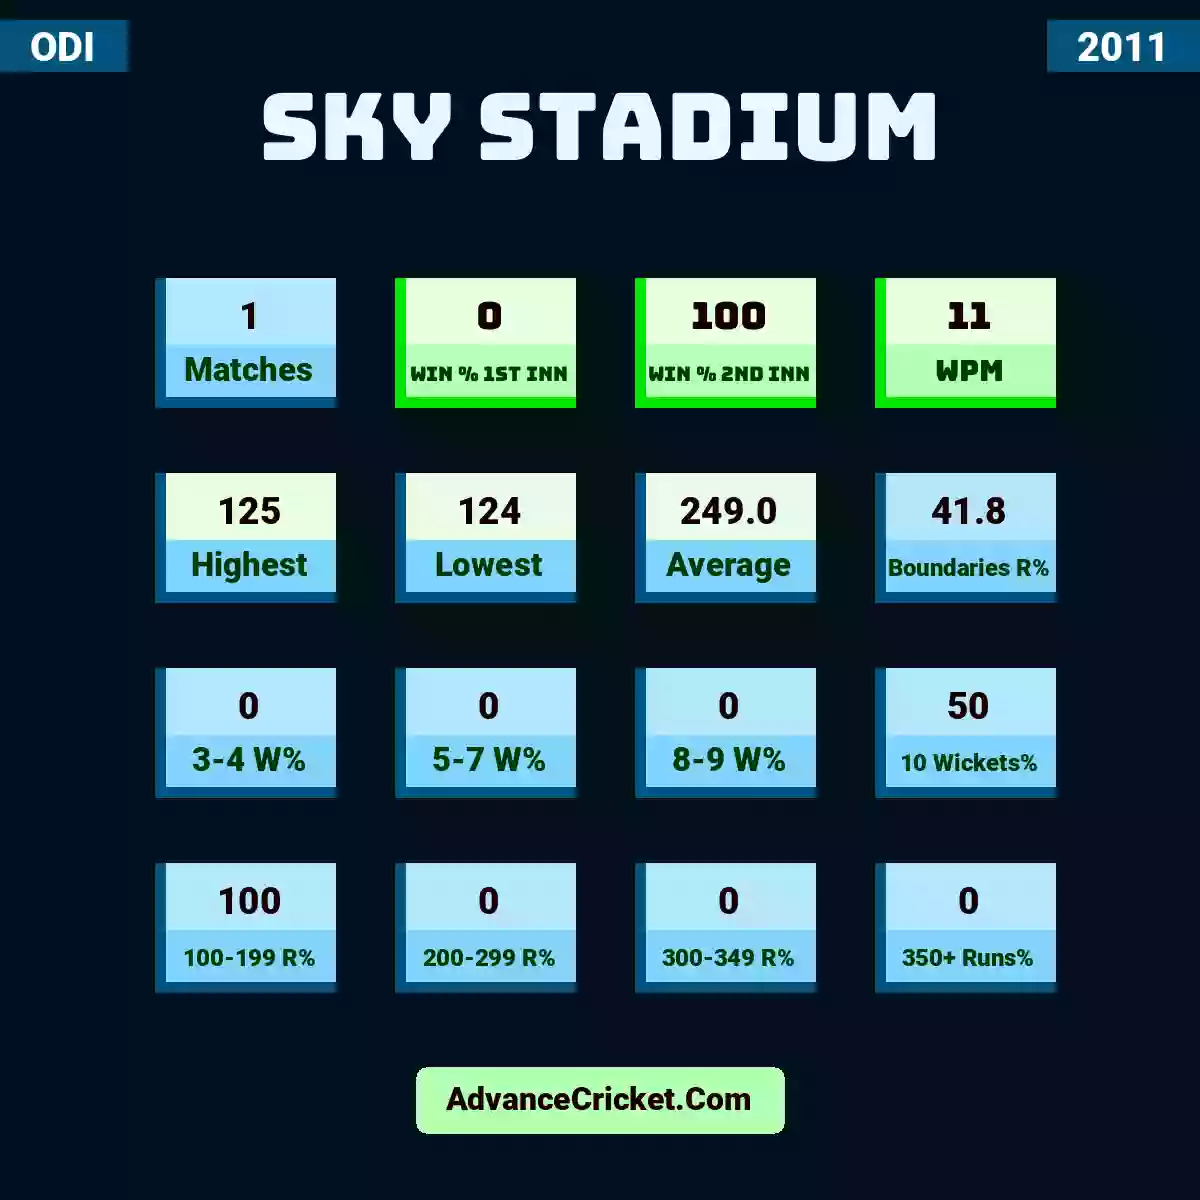 Image showing Sky Stadium with Matches: 1, Win % 1st Inn: 0, Win % 2nd Inn: 100, WPM: 11, Highest: 125, Lowest: 124, Average: 249.0, Boundaries R%: 41.8, 3-4 W%: 0, 5-7 W%: 0, 8-9 W%: 0, 10 Wickets%: 50, 100-199 R%: 100, 200-299 R%: 0, 300-349 R%: 0, 350+ Runs%: 0.